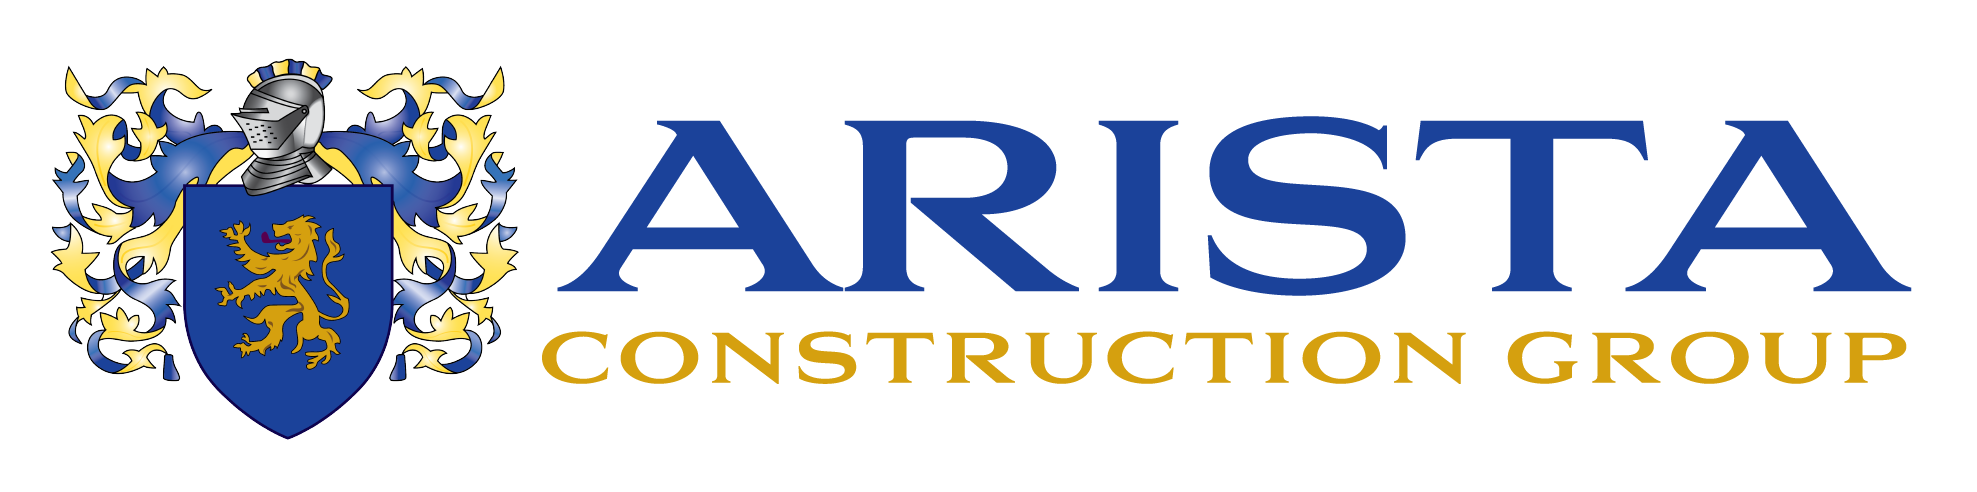 Arista Construction Group Main Logo